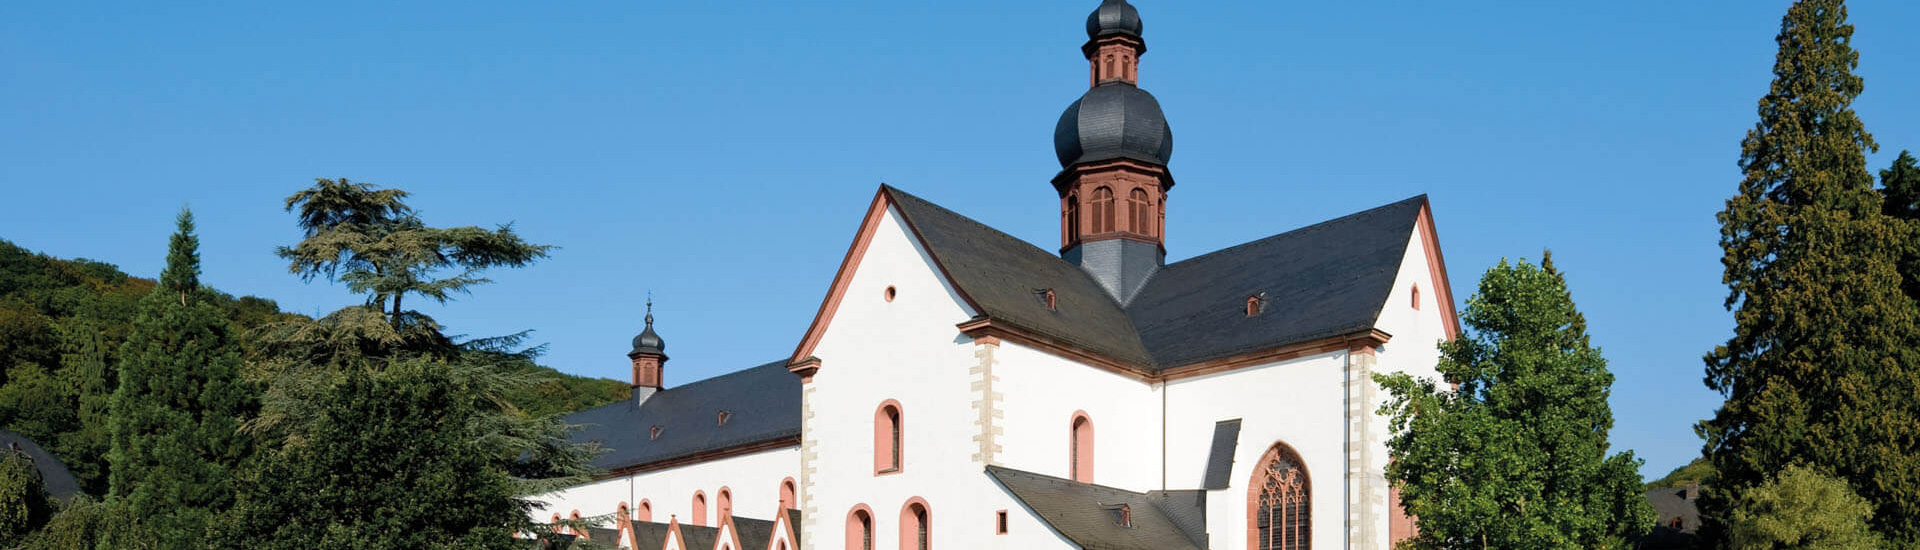 Kloster Eberbach Eltville